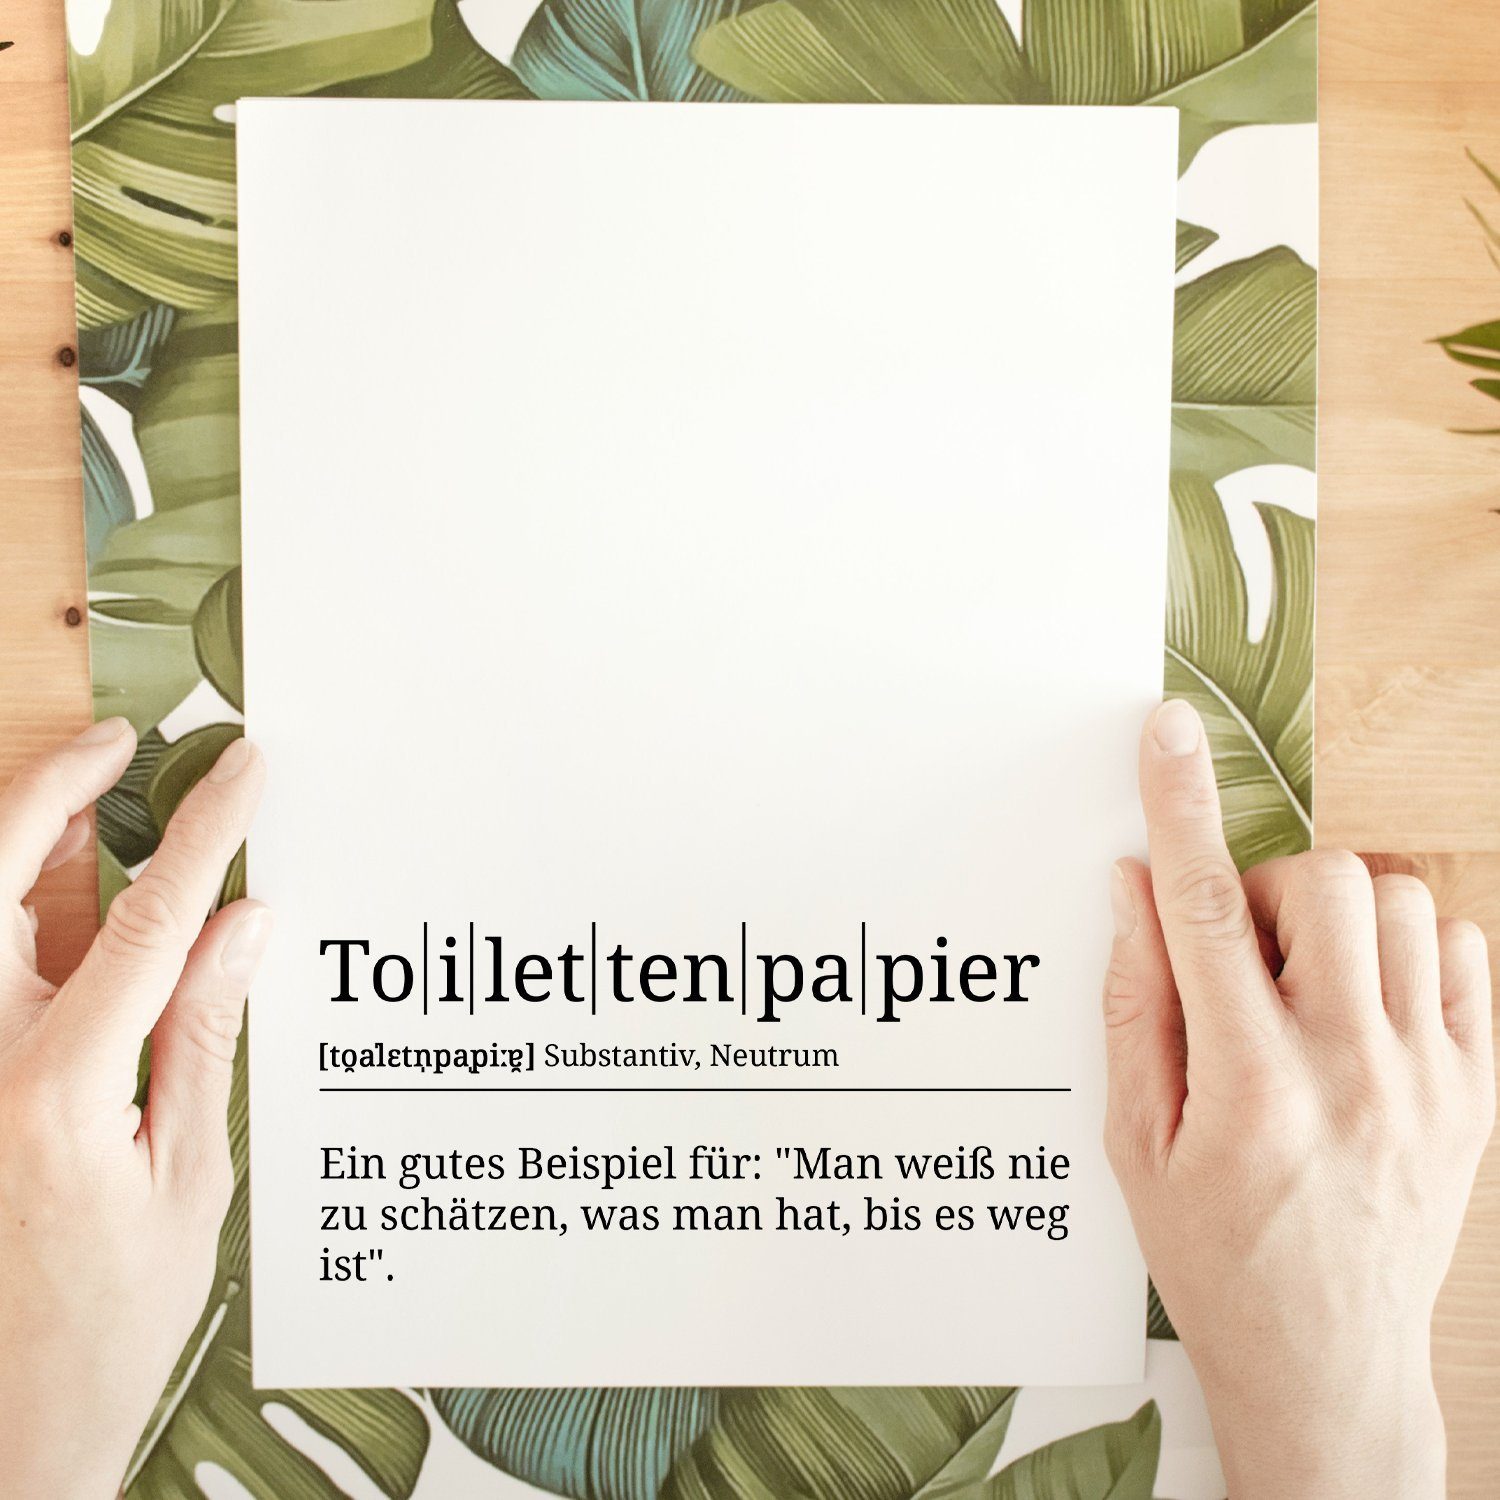 Wandbild Tigerlino Kunstdruck Definition Badezimmer Poster Toilettenpapier